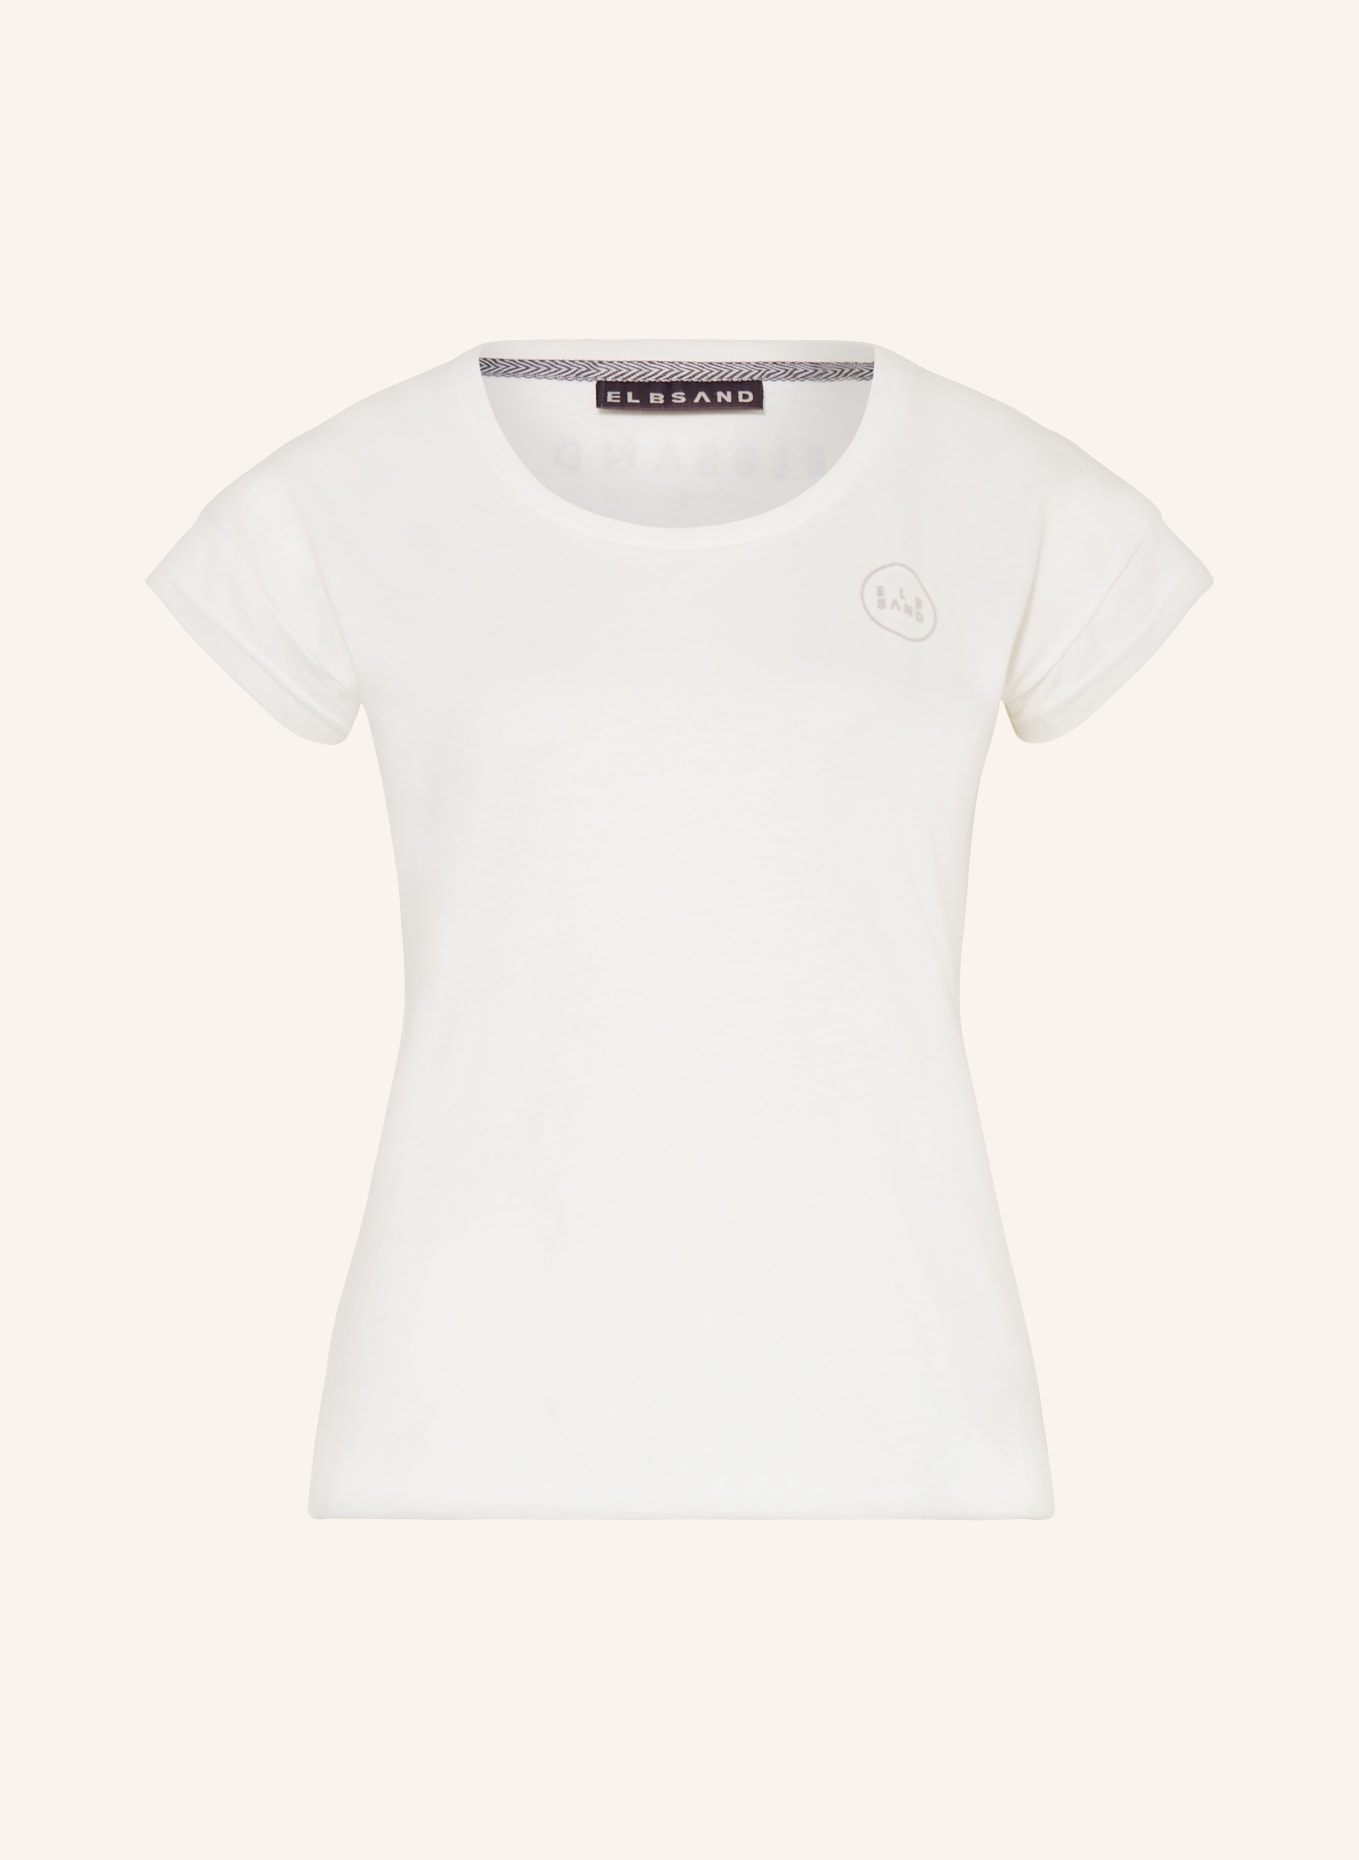 ELBSAND T-shirt RAGNE, Color: WHITE (Image 1)